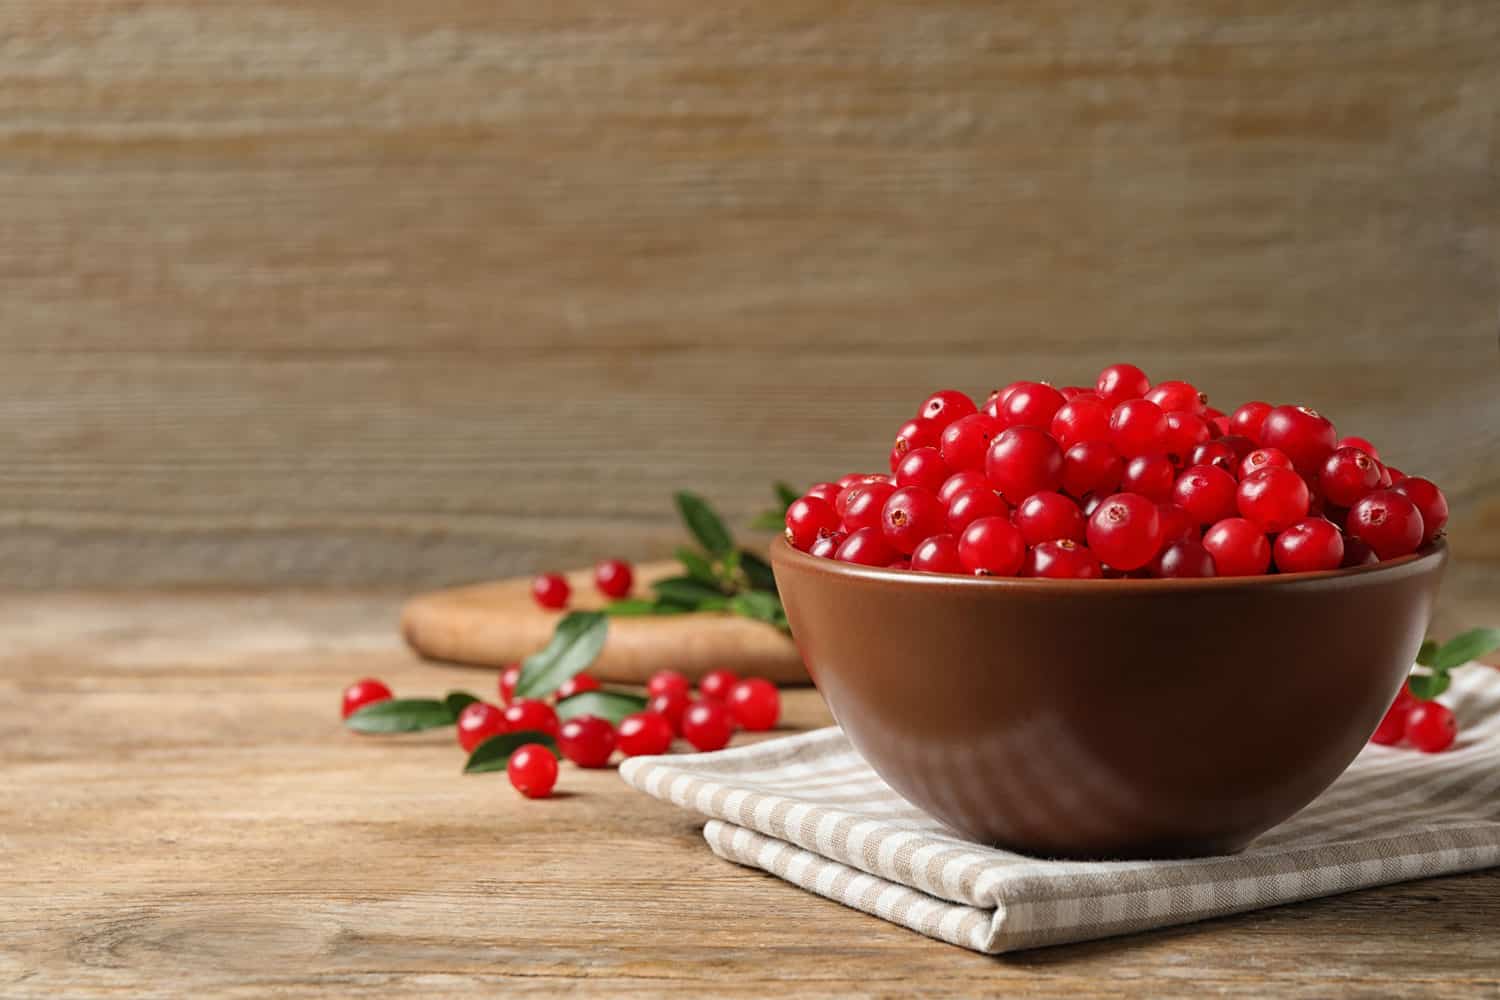 A bowl full of cranberries